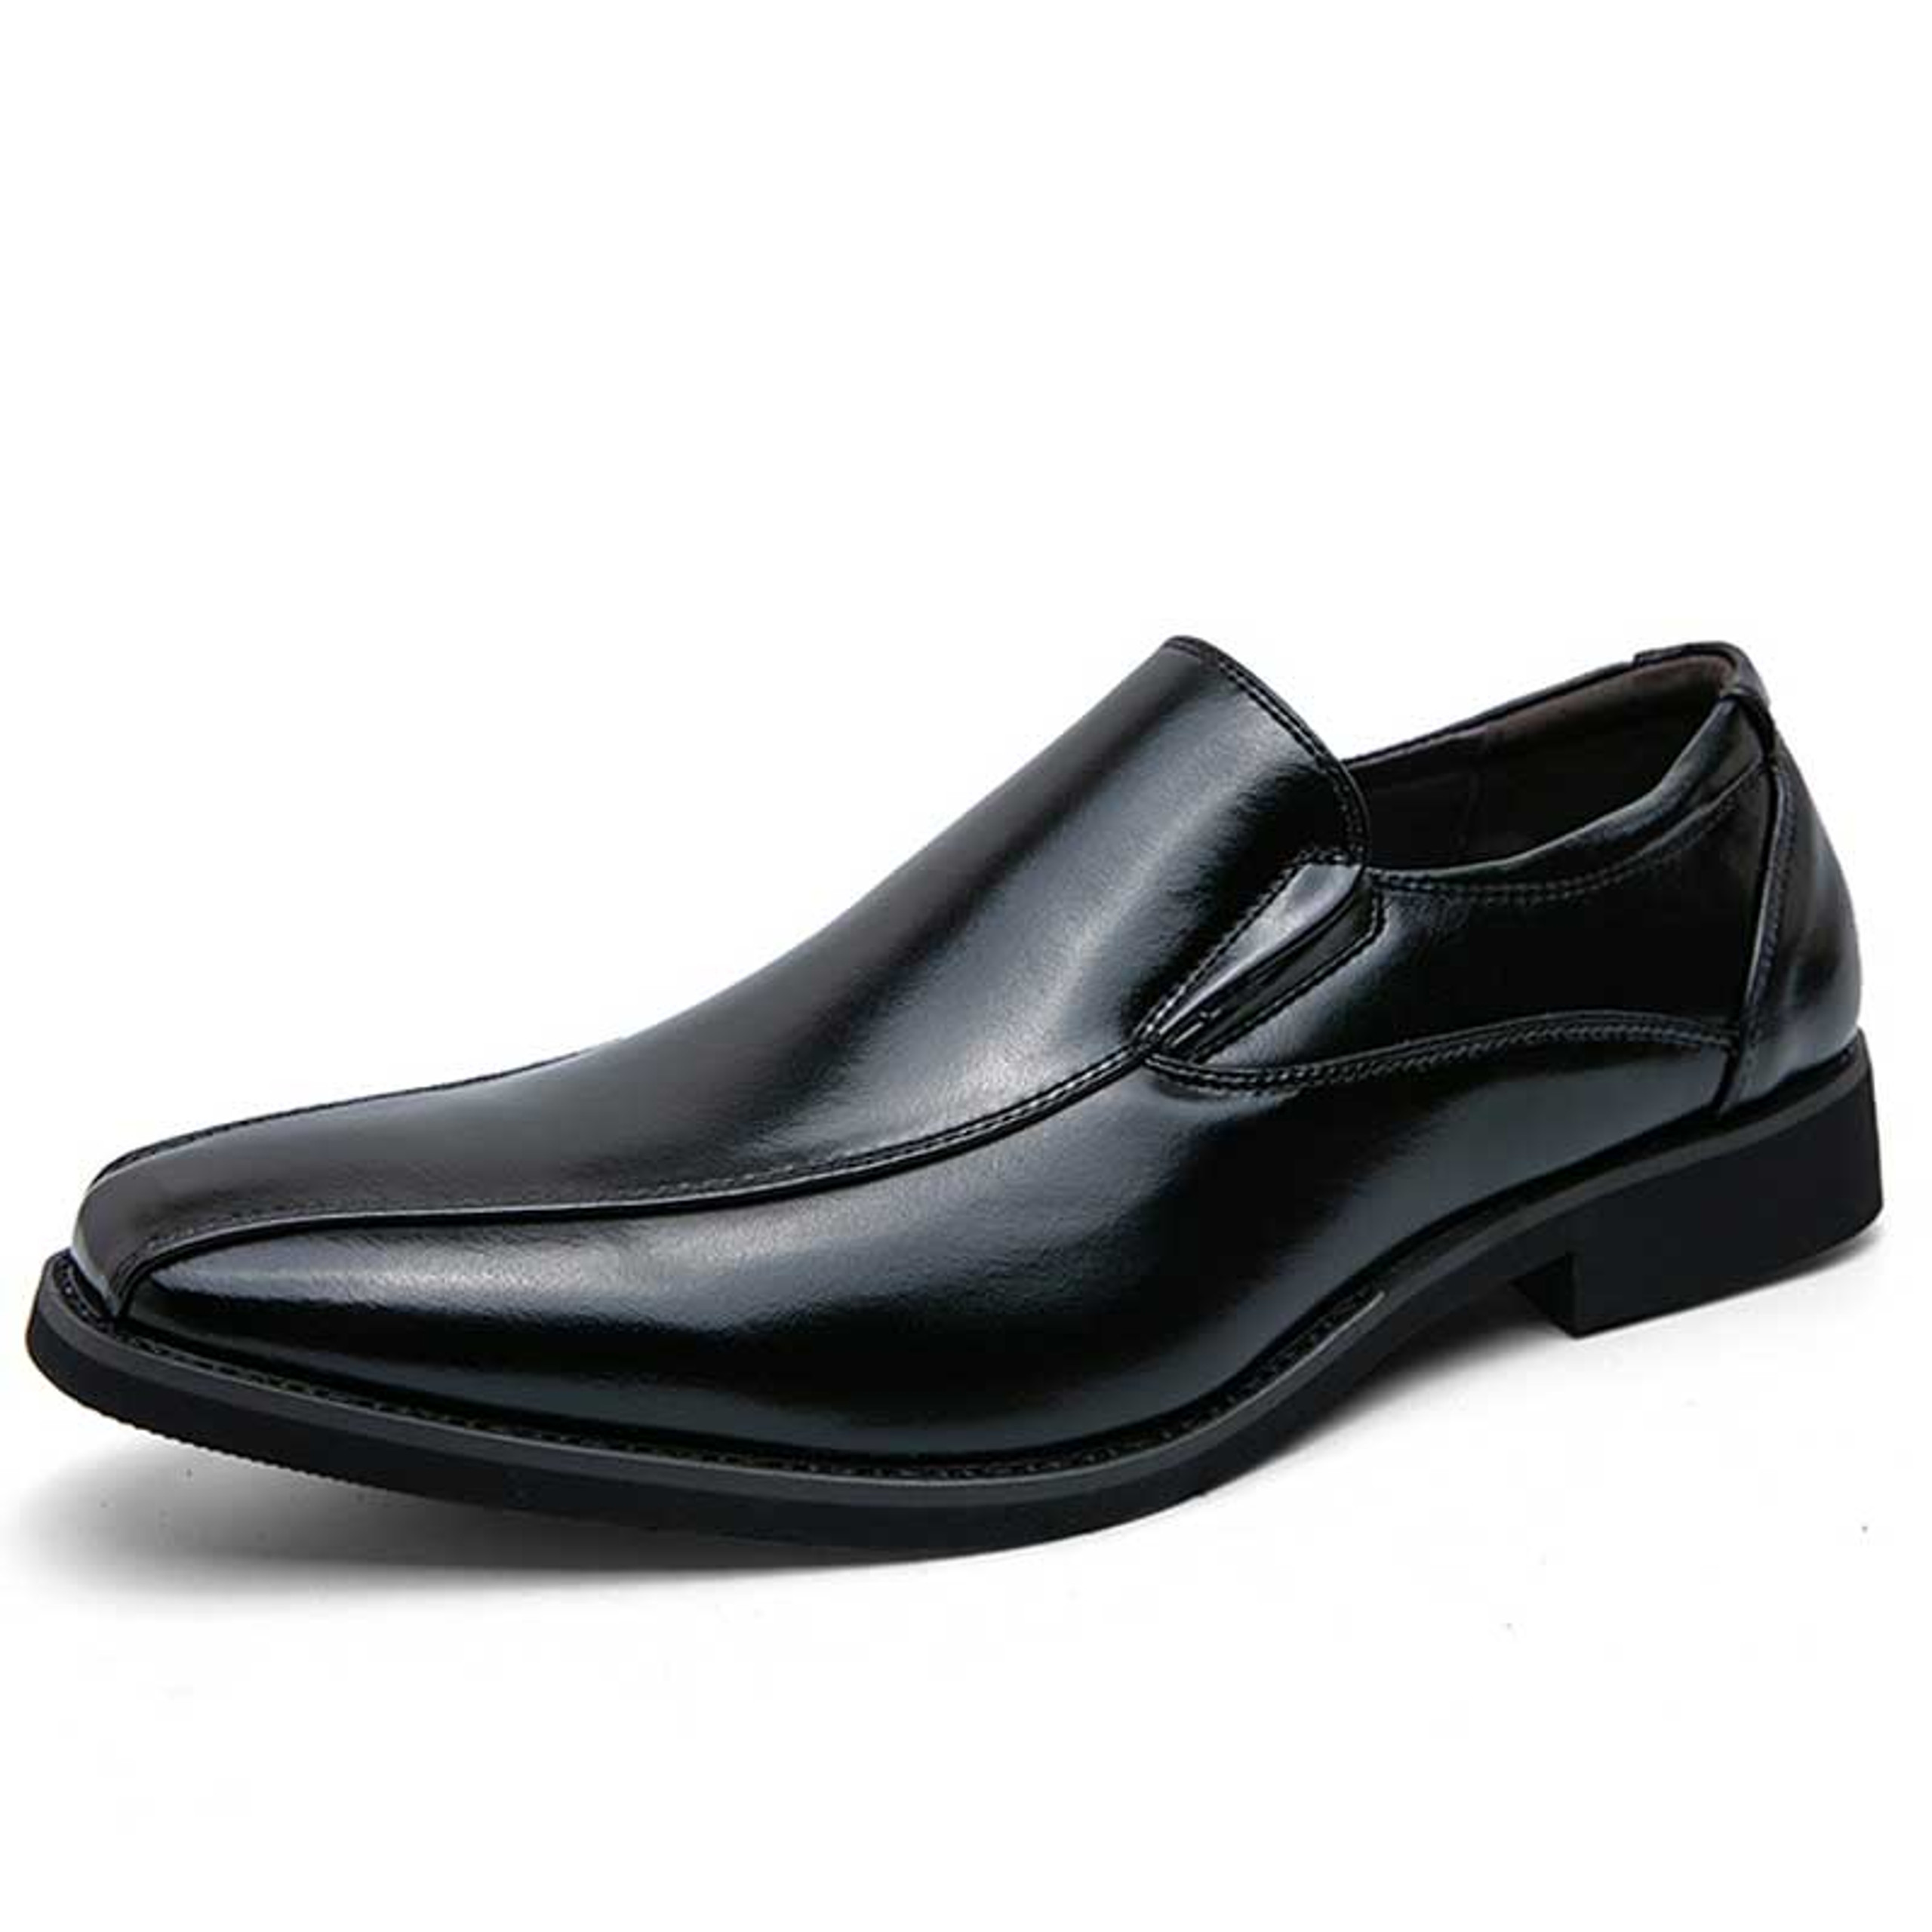 Men's Dress Shoes Online | Free Shipping US, UK, CA, Europe, Japan ...